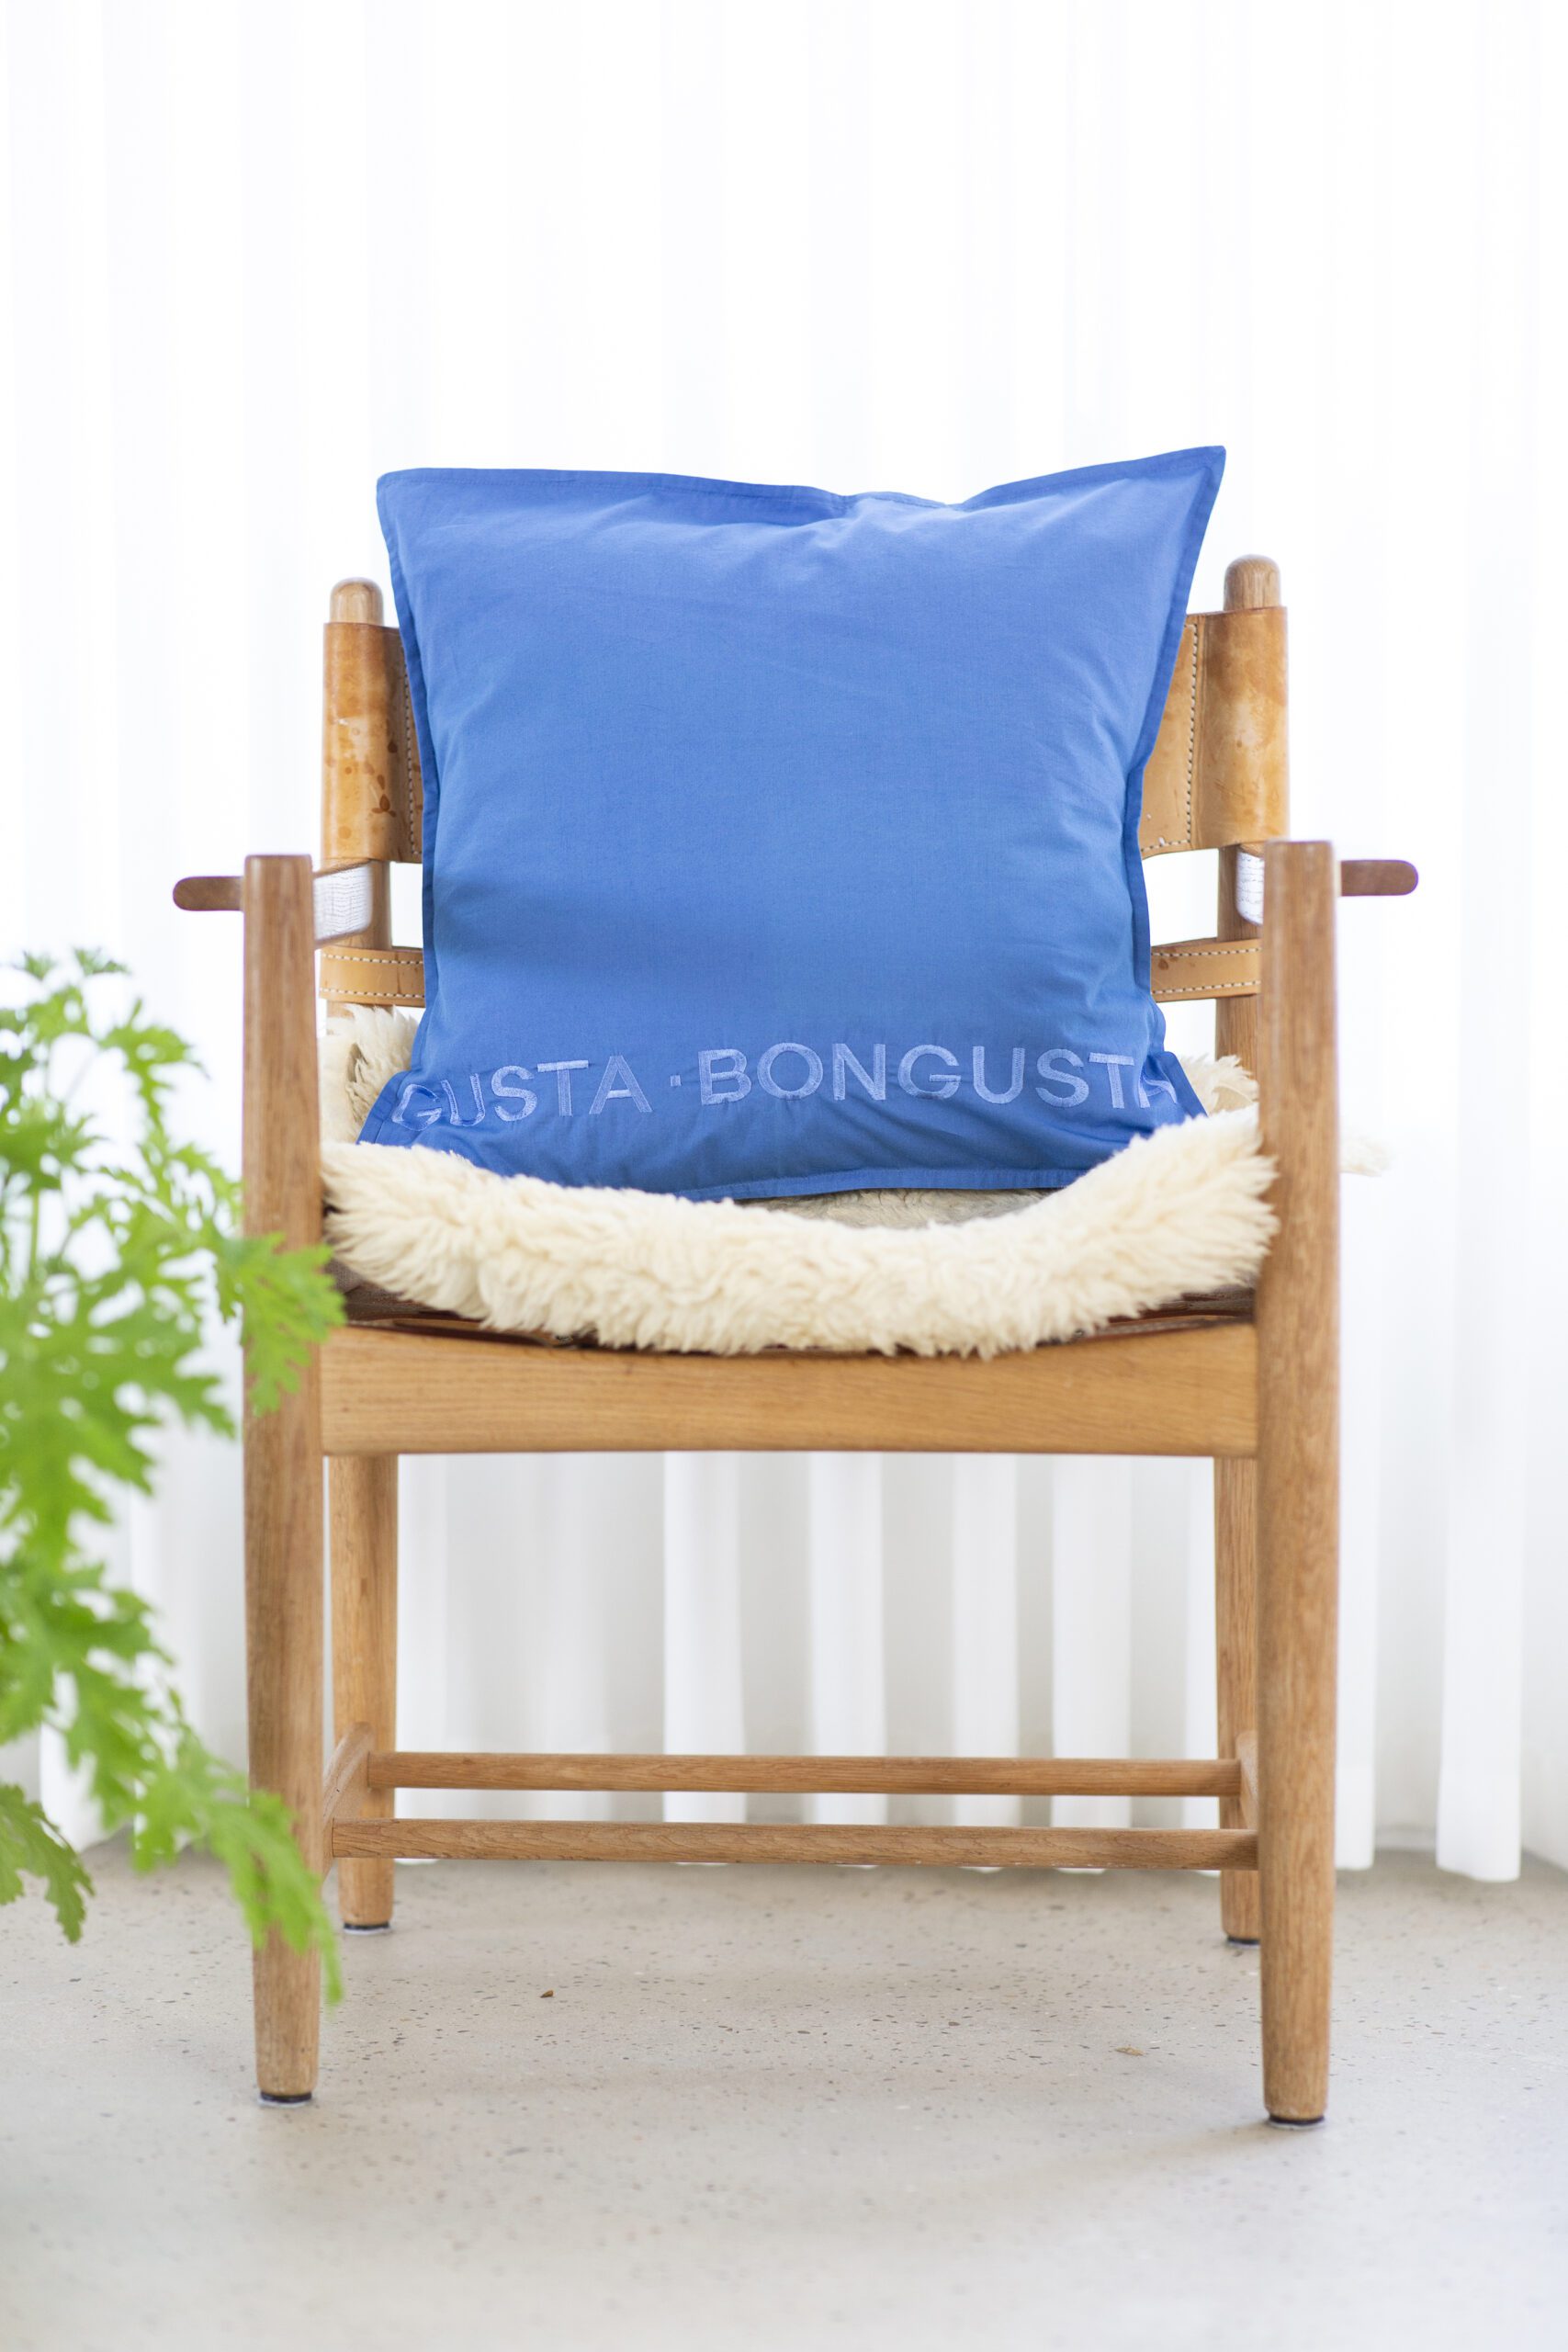 Bongusta Halo Pillow, Ultramarine blue